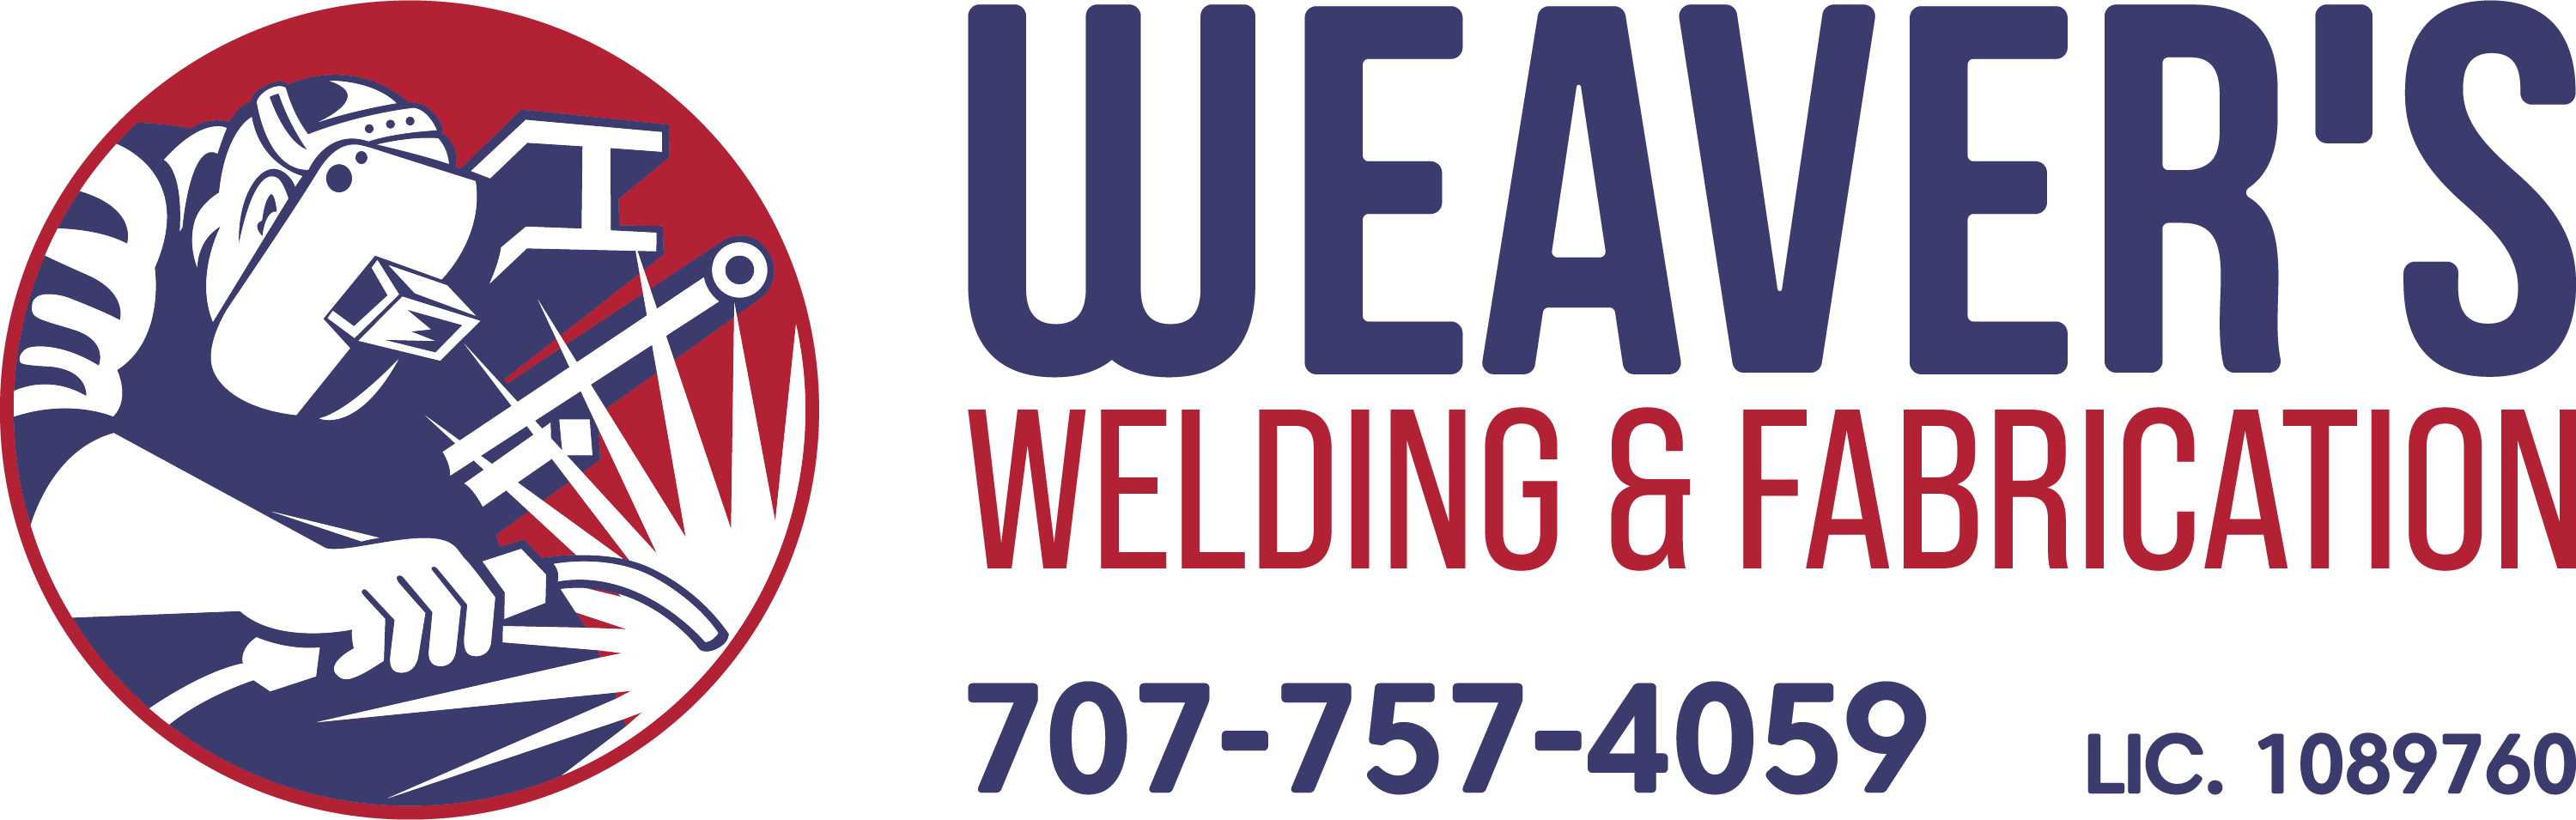 Weaver's Welding Logo